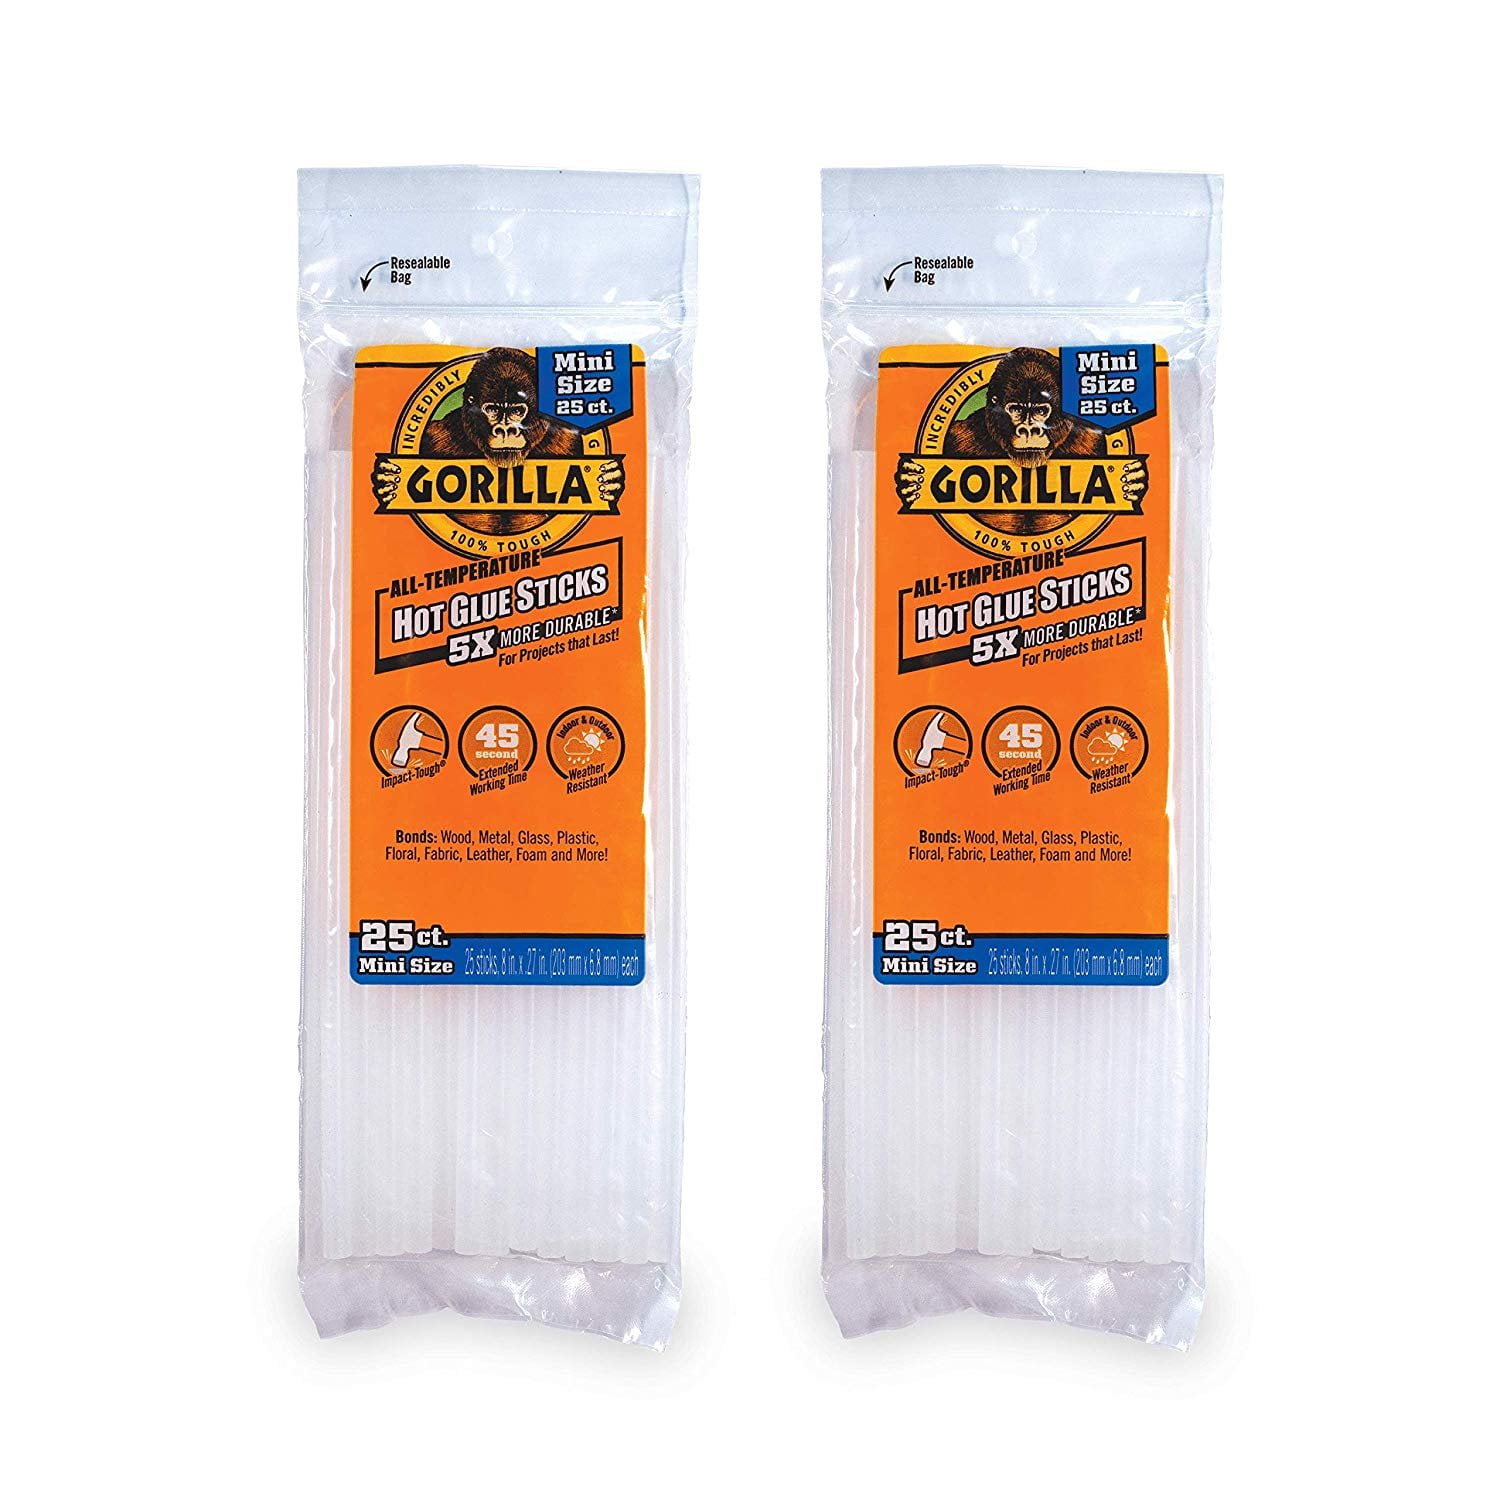  Gorilla Hot Glue Sticks, Mini Size, 4 Long x .27